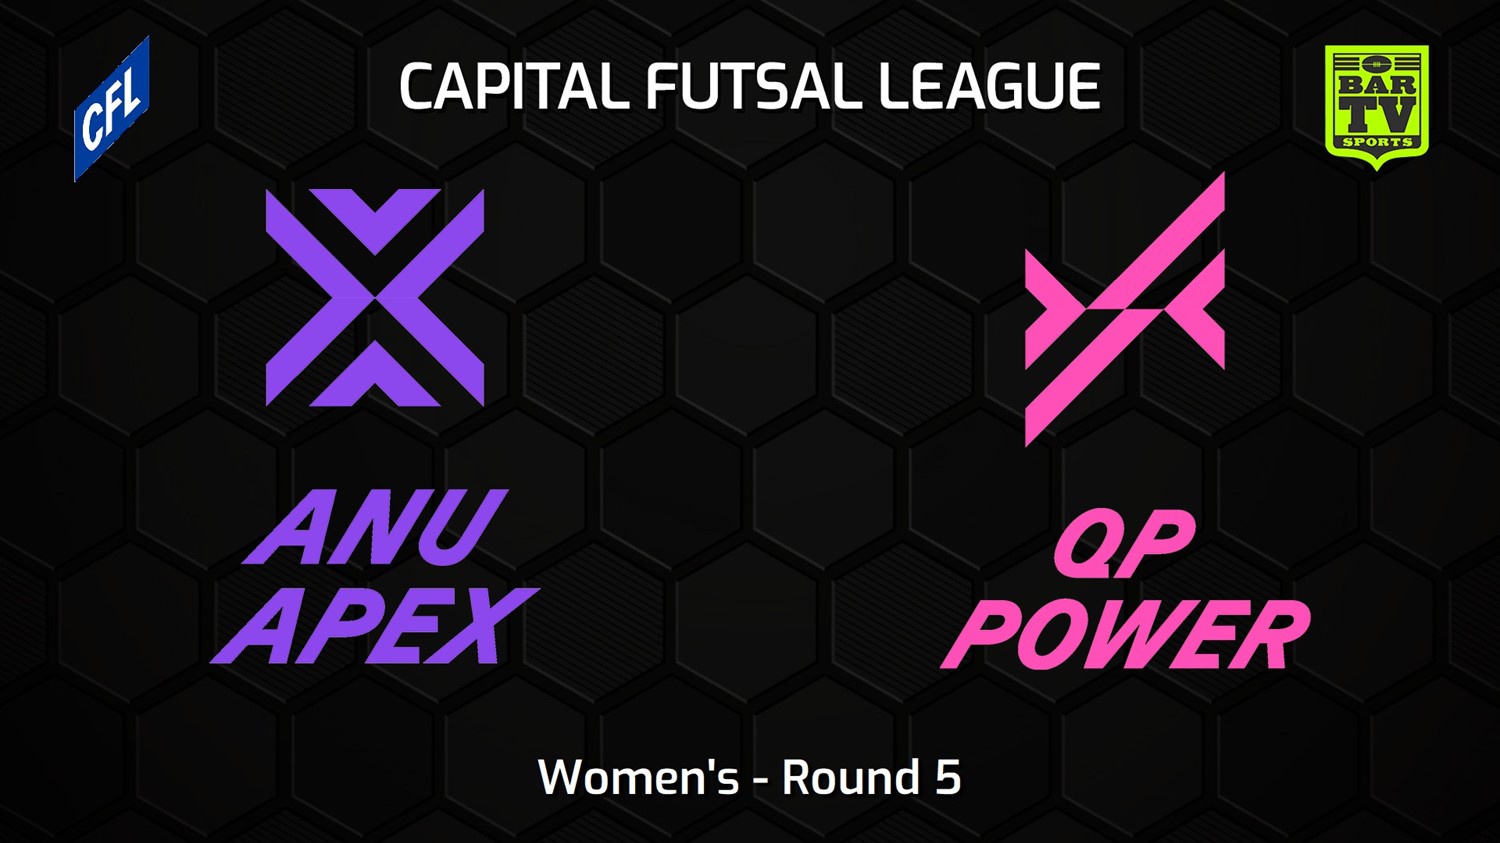 230121-Capital Football Futsal Round 5 - Women's - ANU Apex v Queanbeyan-Palerang Power Minigame Slate Image